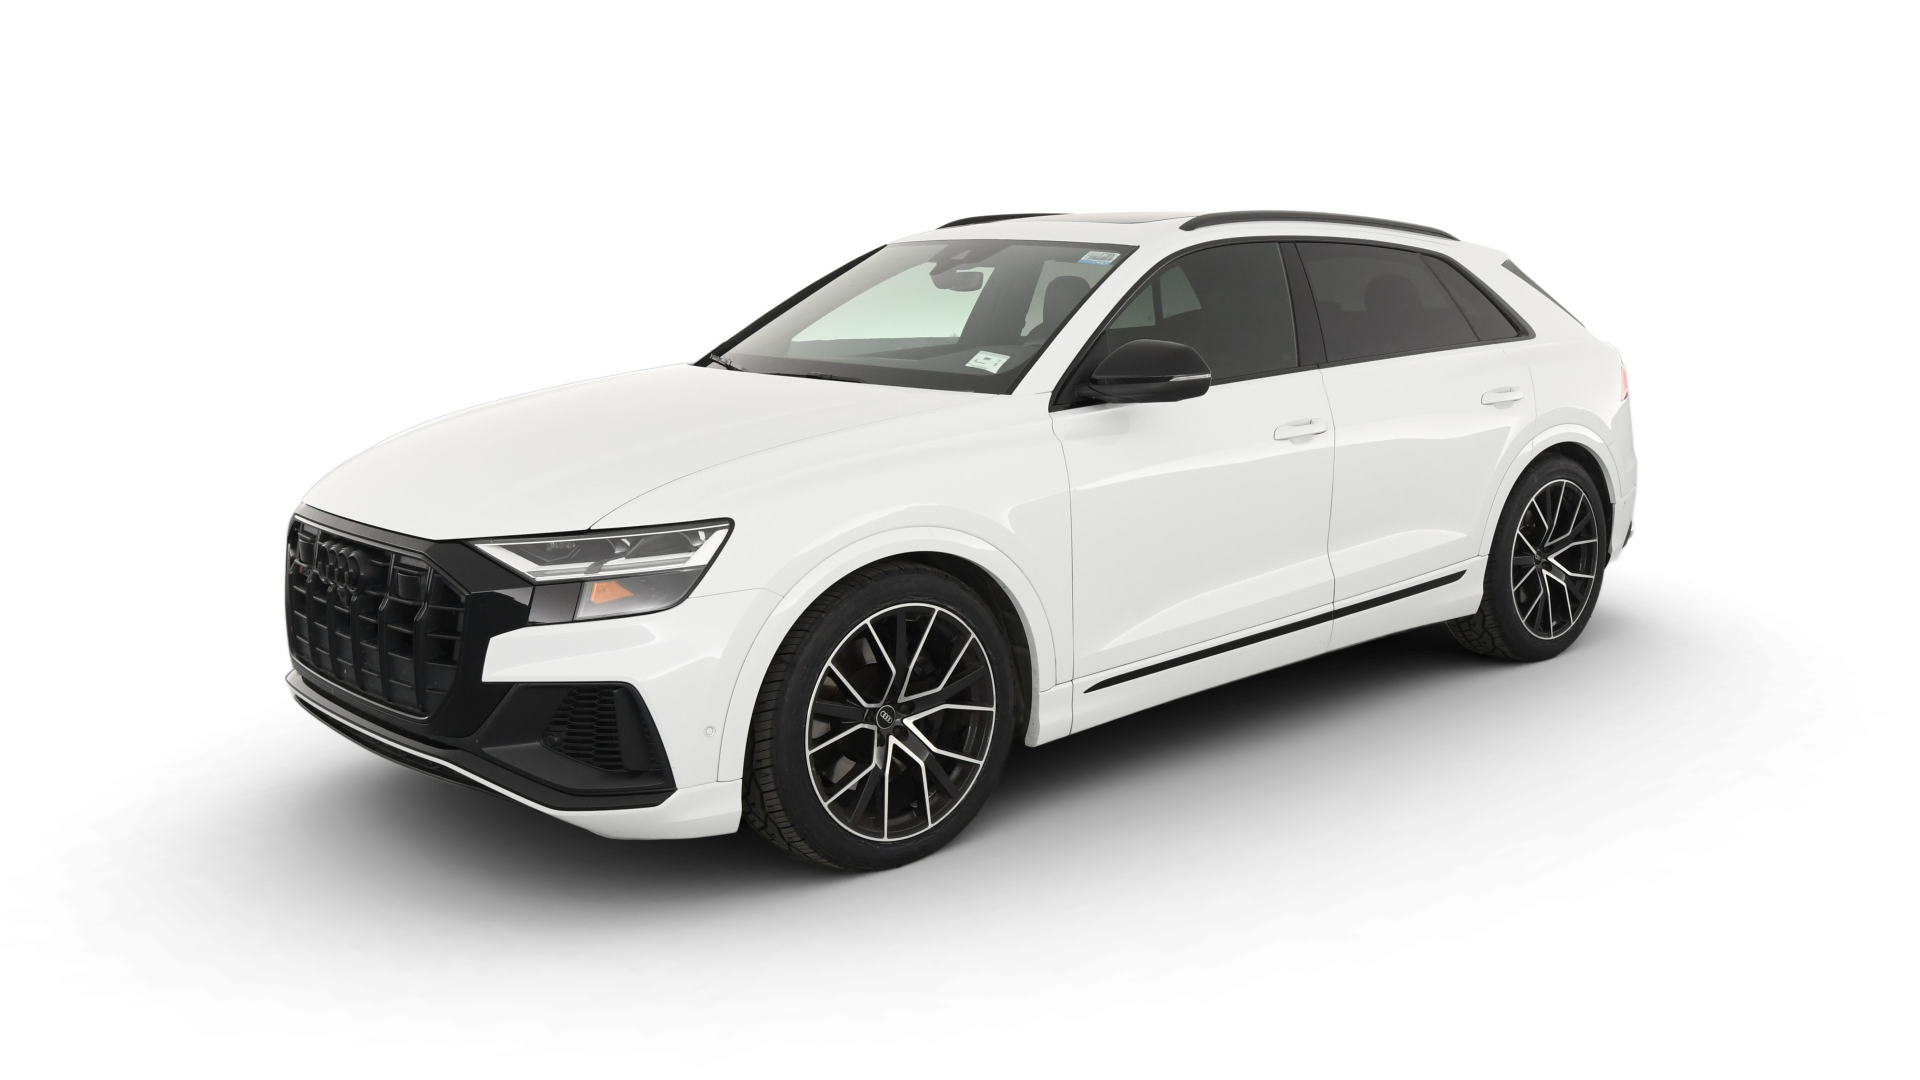 Audi SQ8 model image.